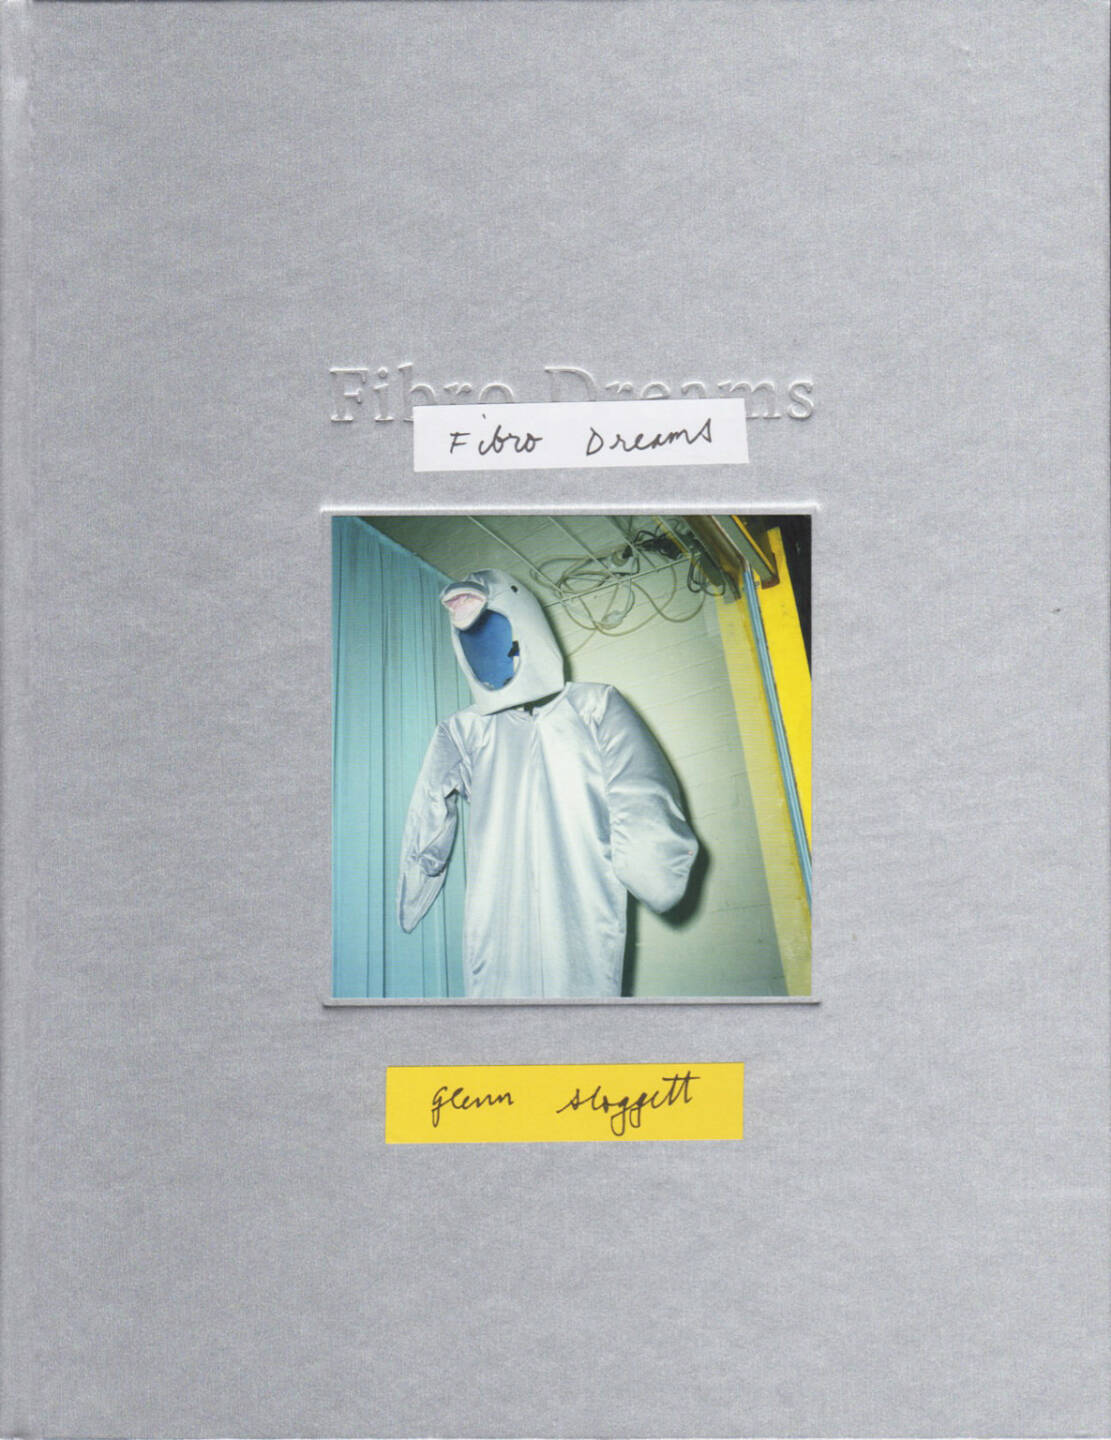 Glenn Sloggett - Fibro Dreams, Self published 2014, Cover - http://josefchladek.com/book/glenn_sloggett_-_fibro_dreams